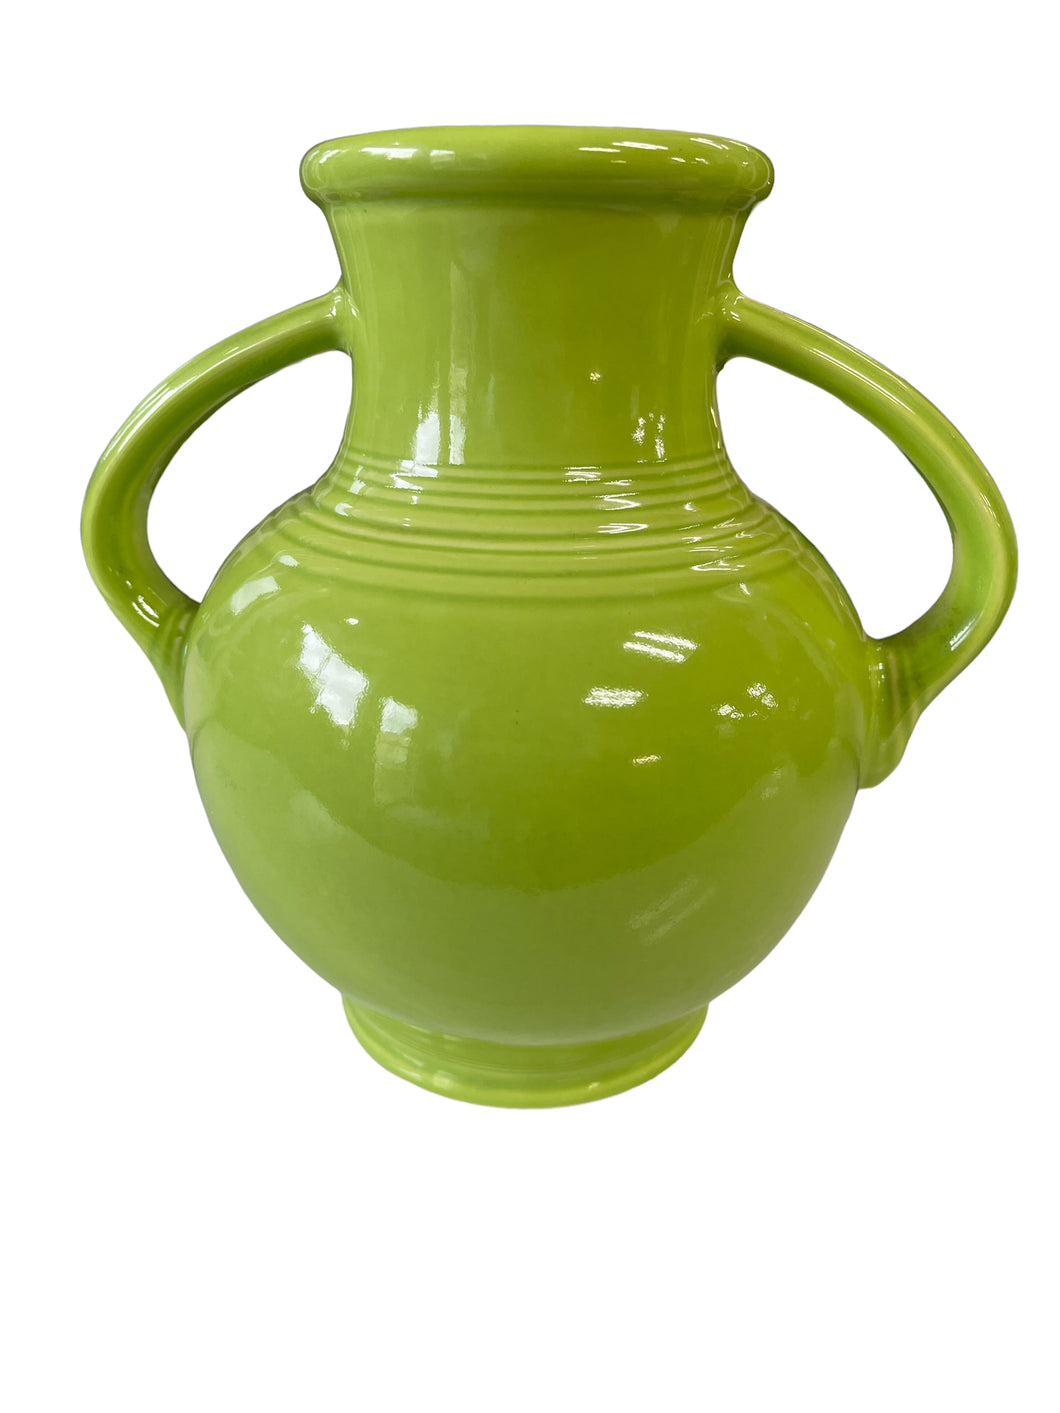 Fiesta Millennium 1 Vase Chartreuse  2  Handled Vase